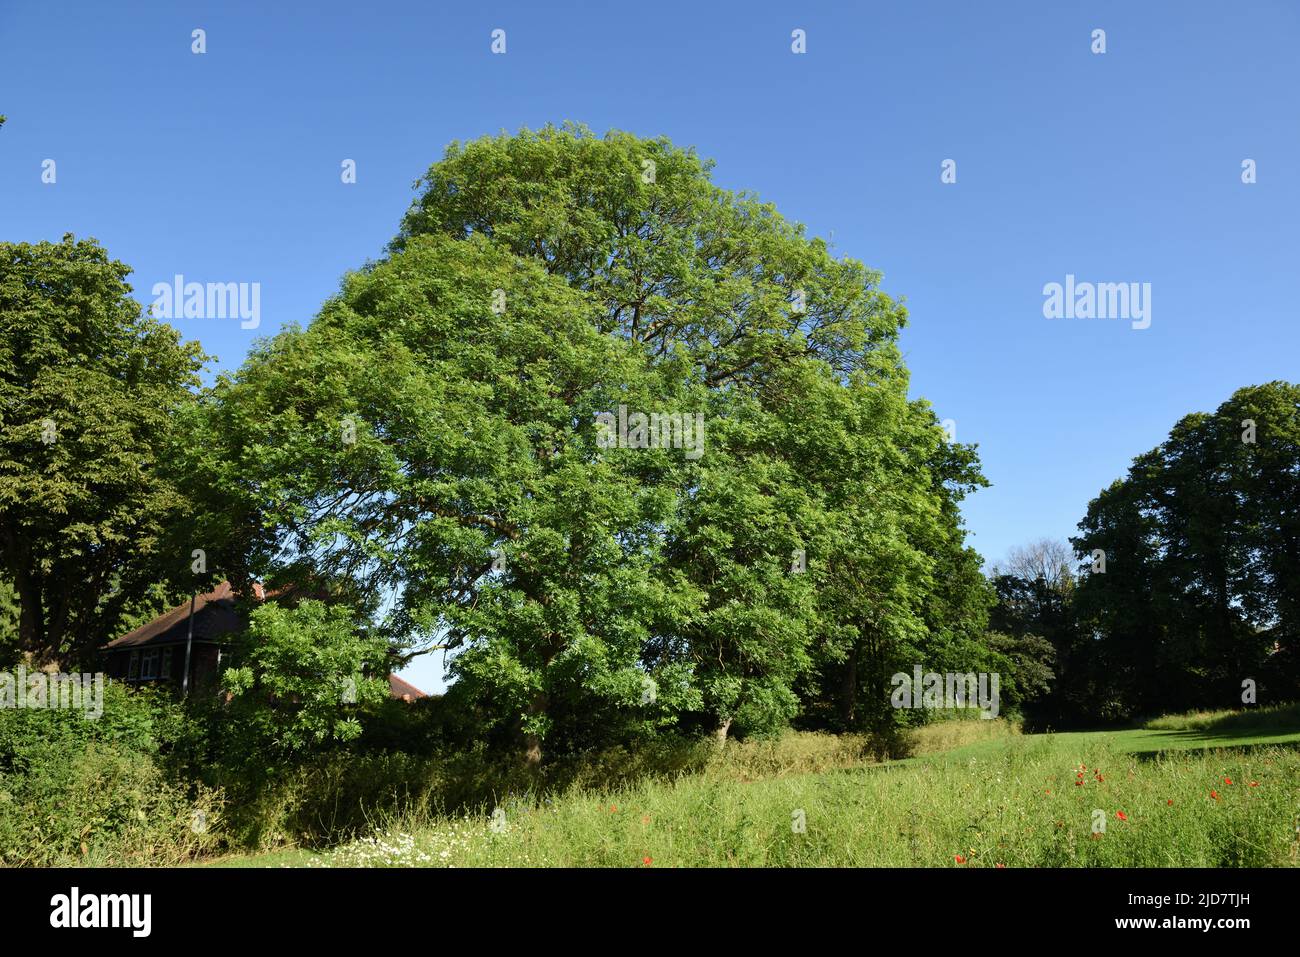 Common or European ash tree, Hedon, East Yorkshire, England Stock Photo